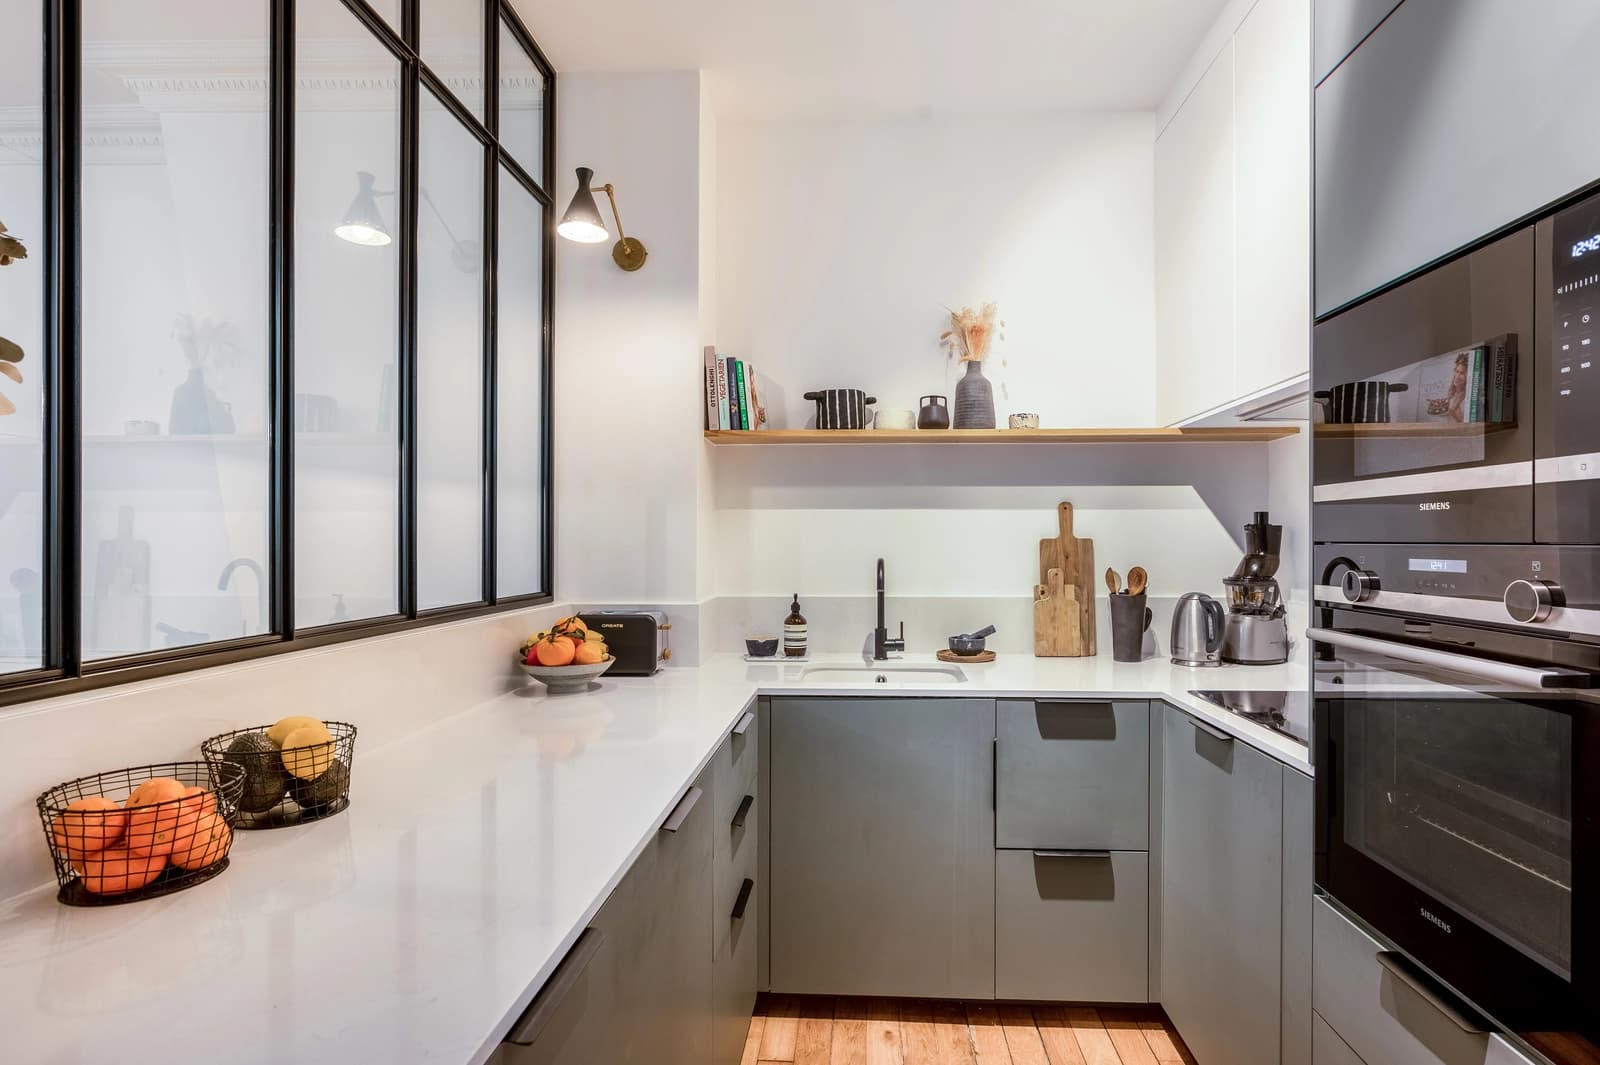 Kitchen in Elegant Hausmanian Minimalist apartment - 1